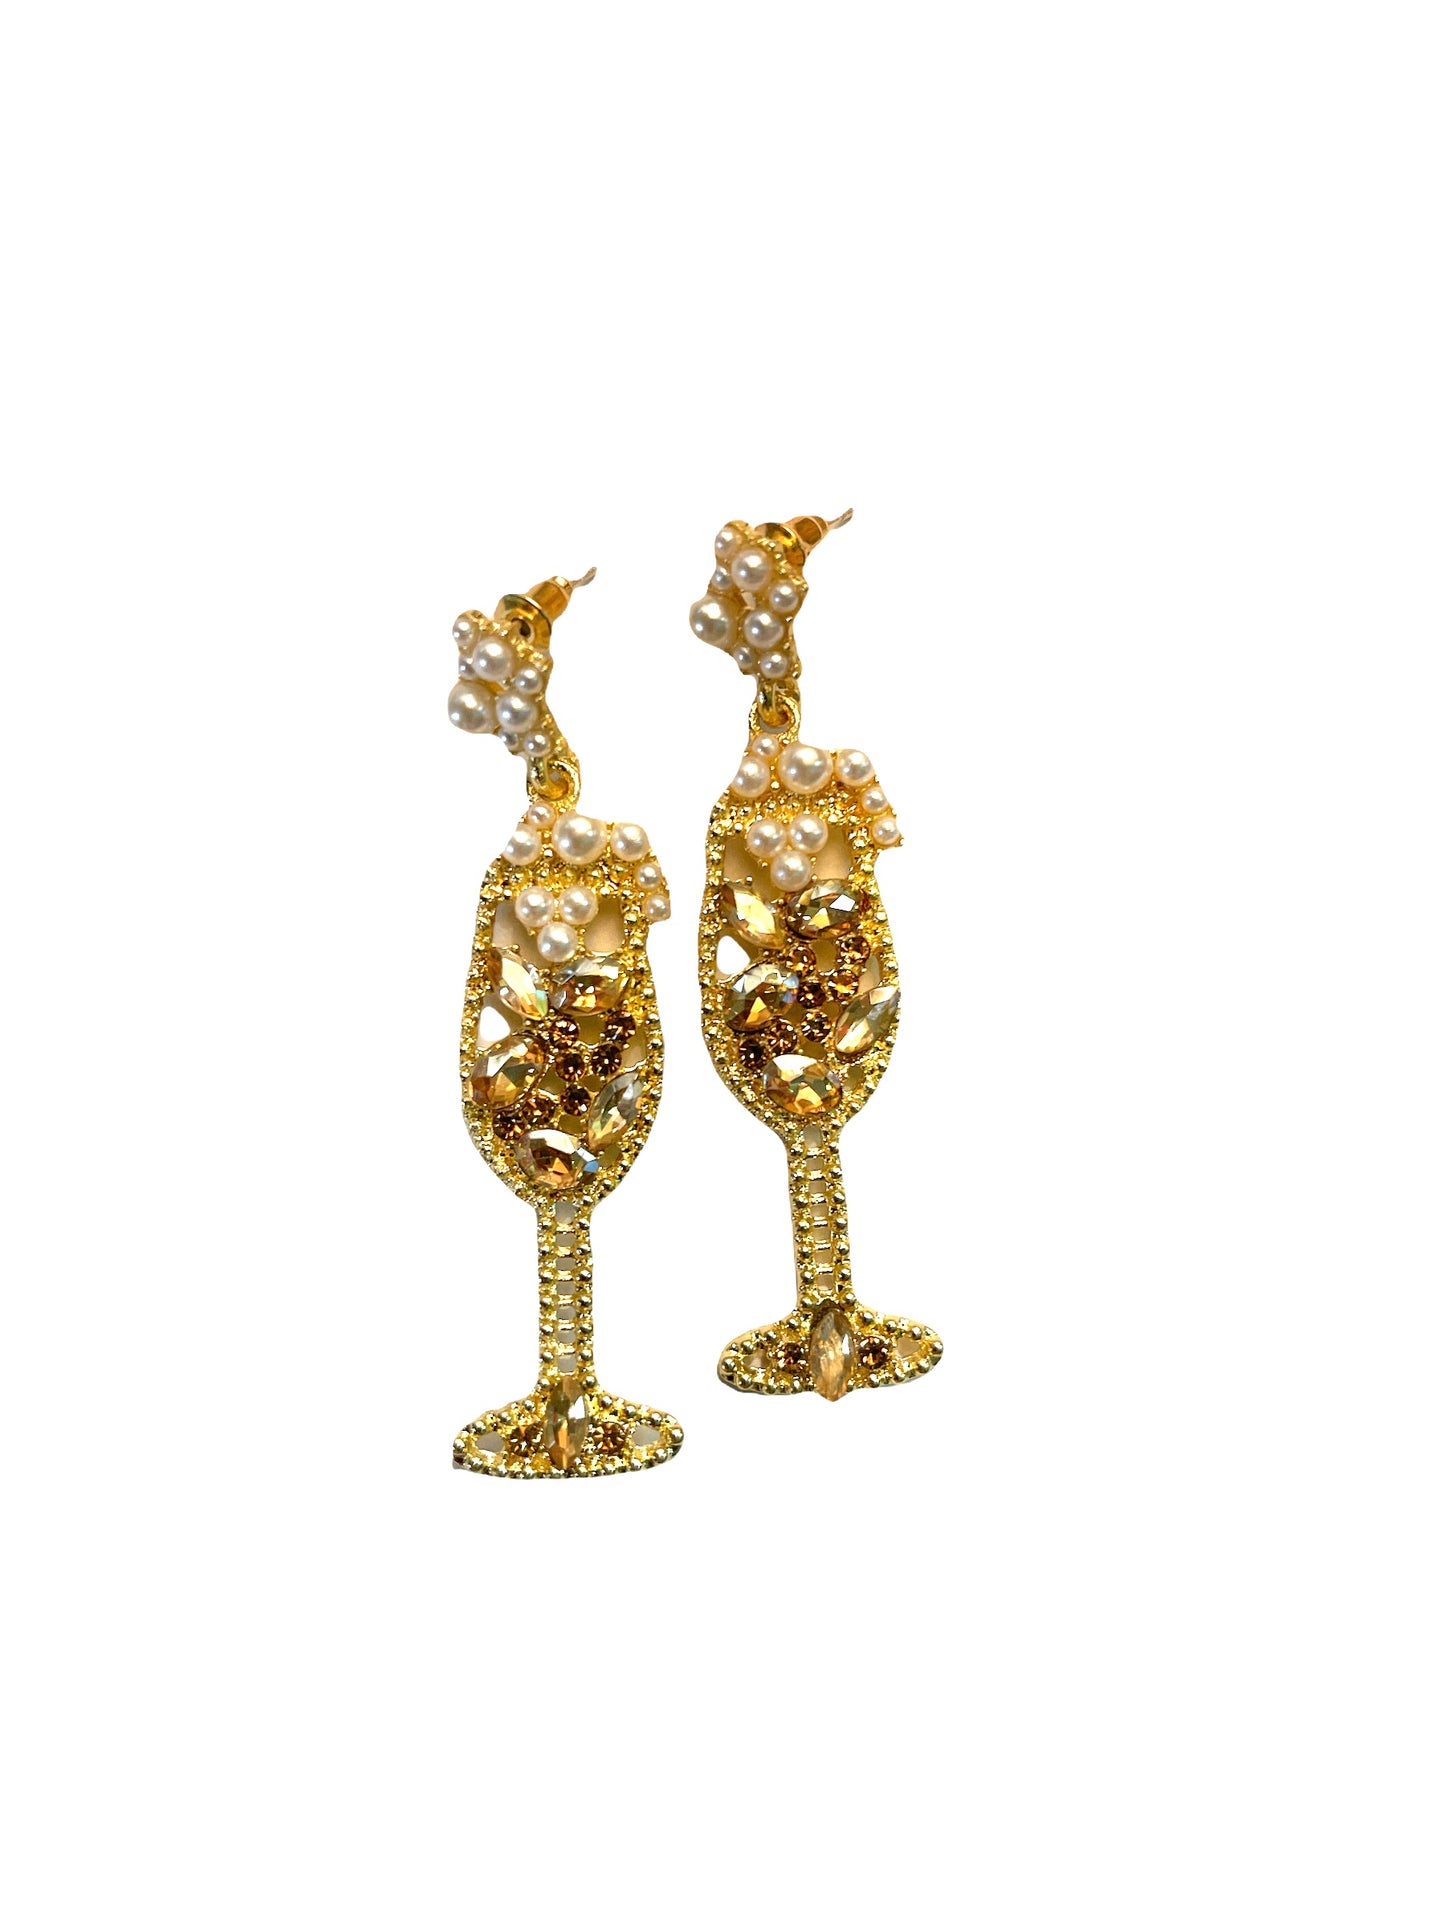 Pearl Champagne Earrings